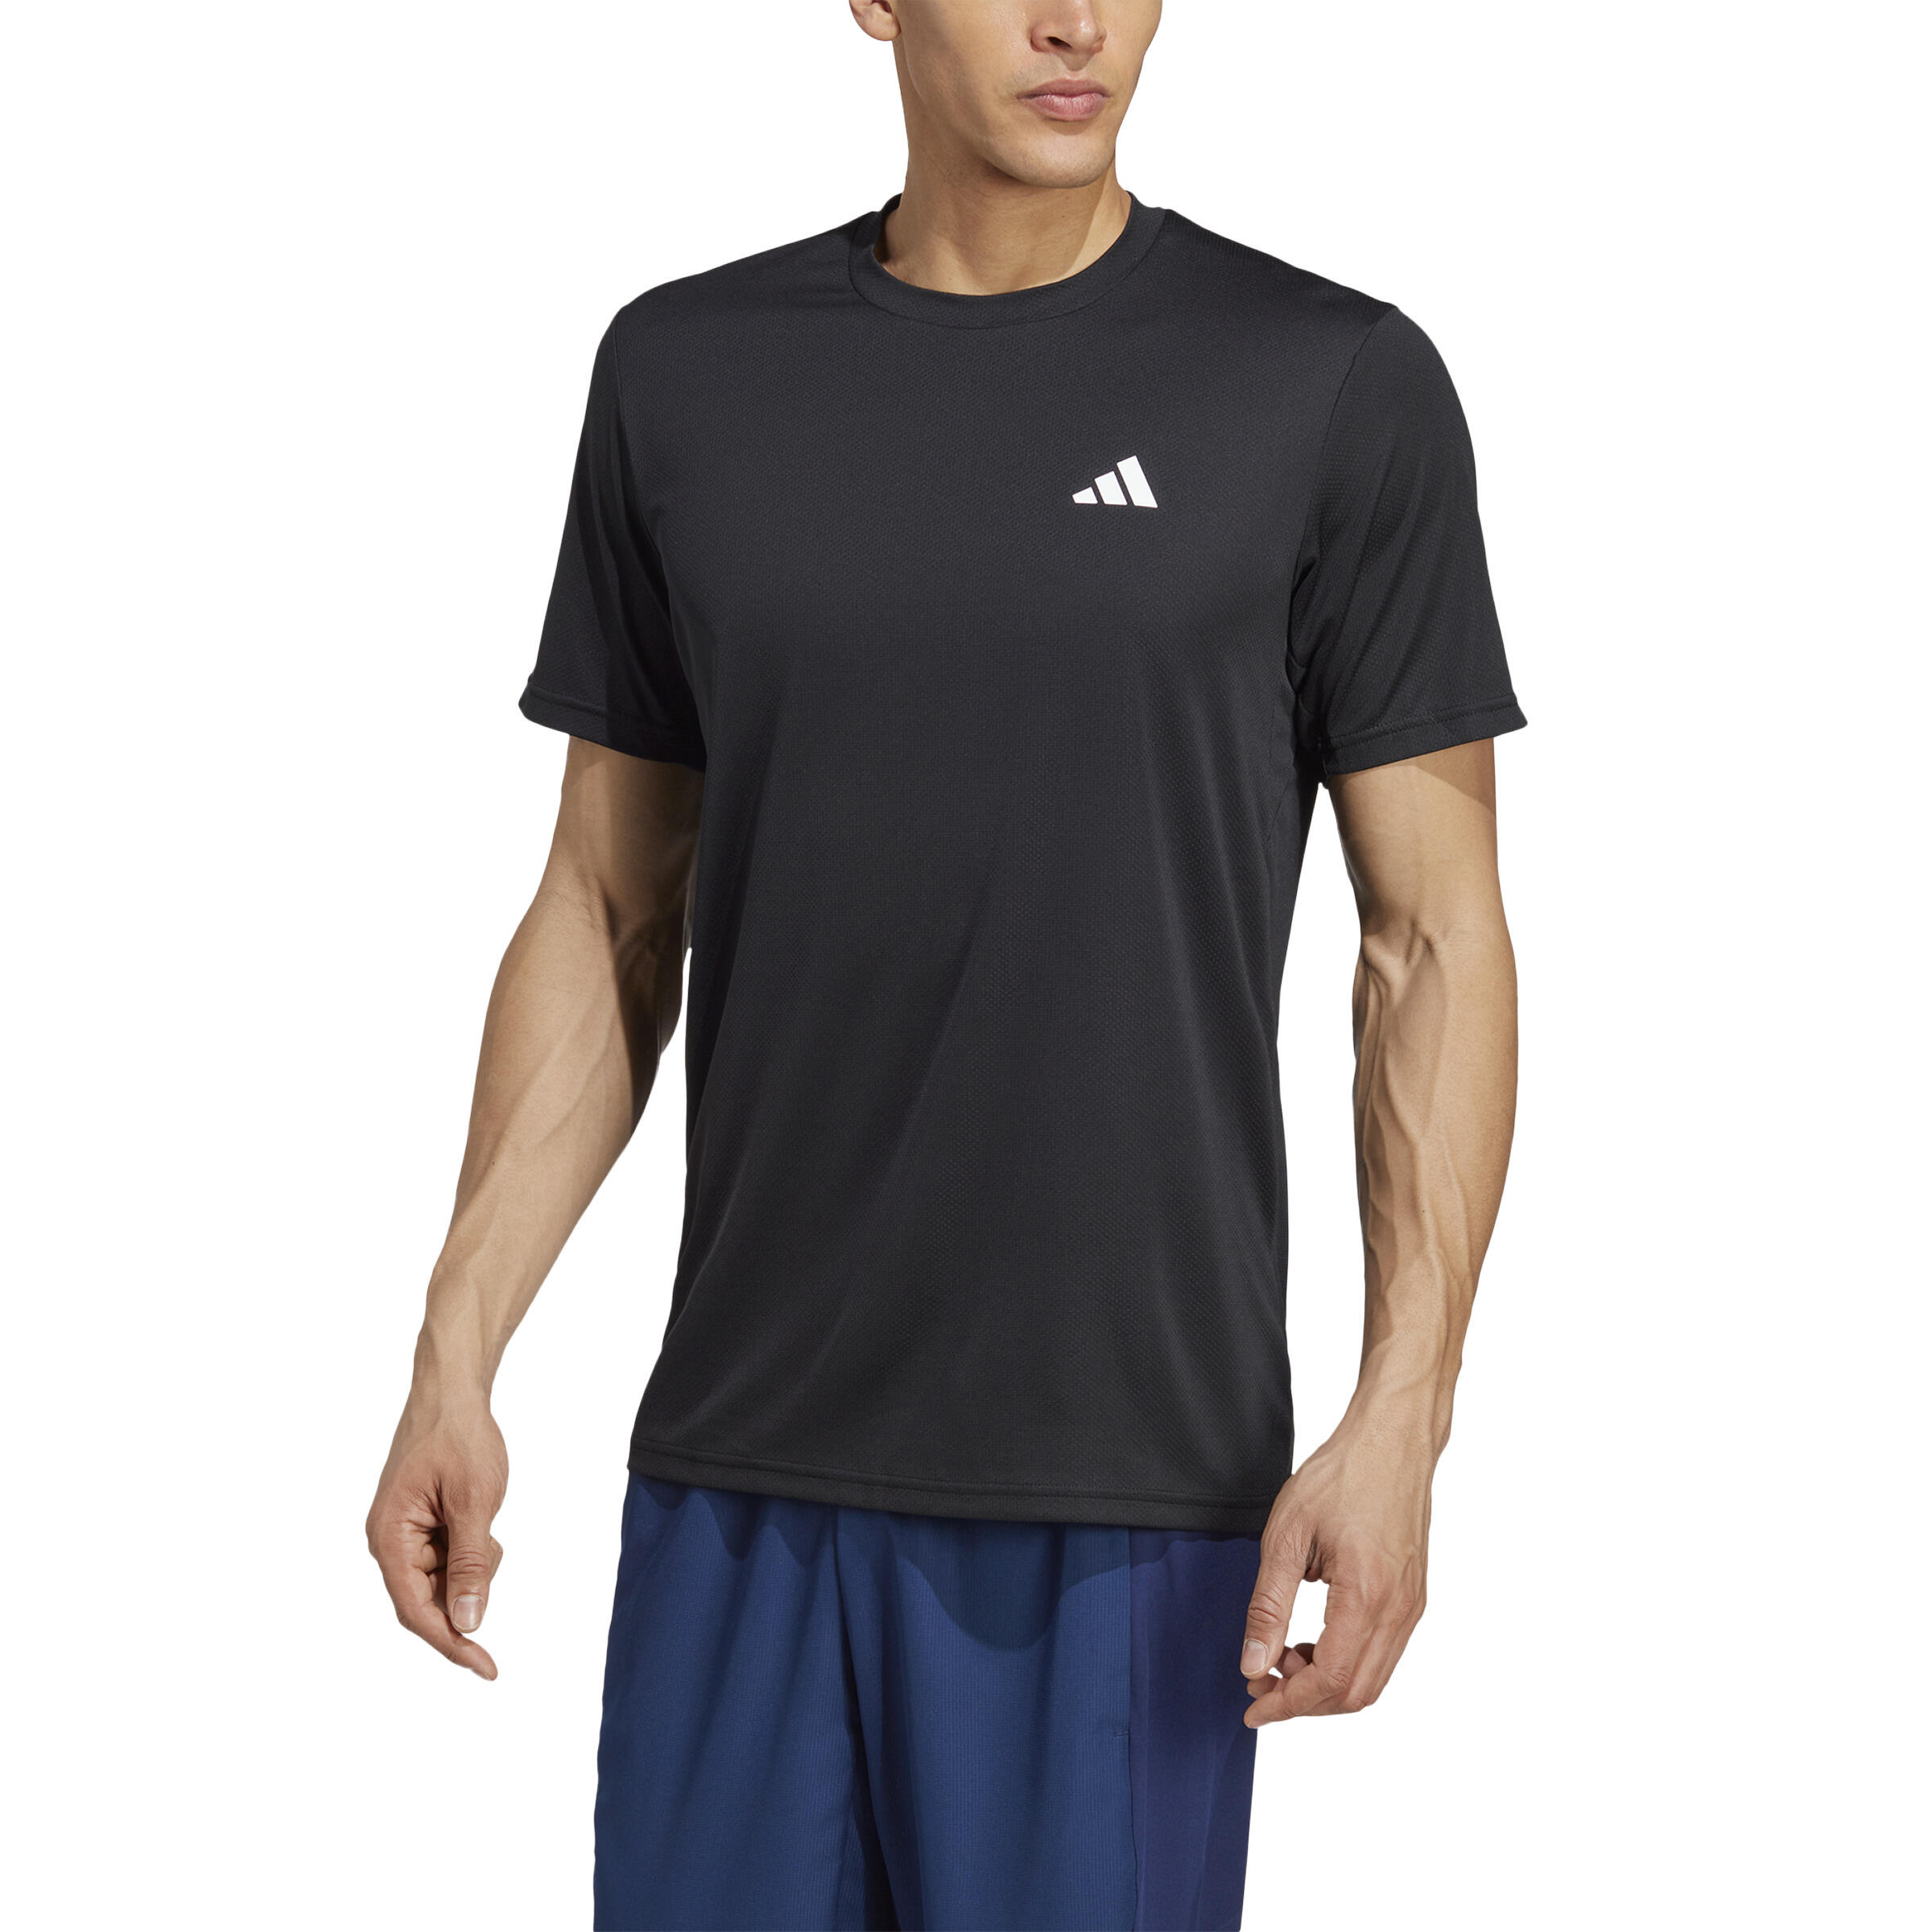 Men's Cardio Fitness T-Shirt - Black 2/7